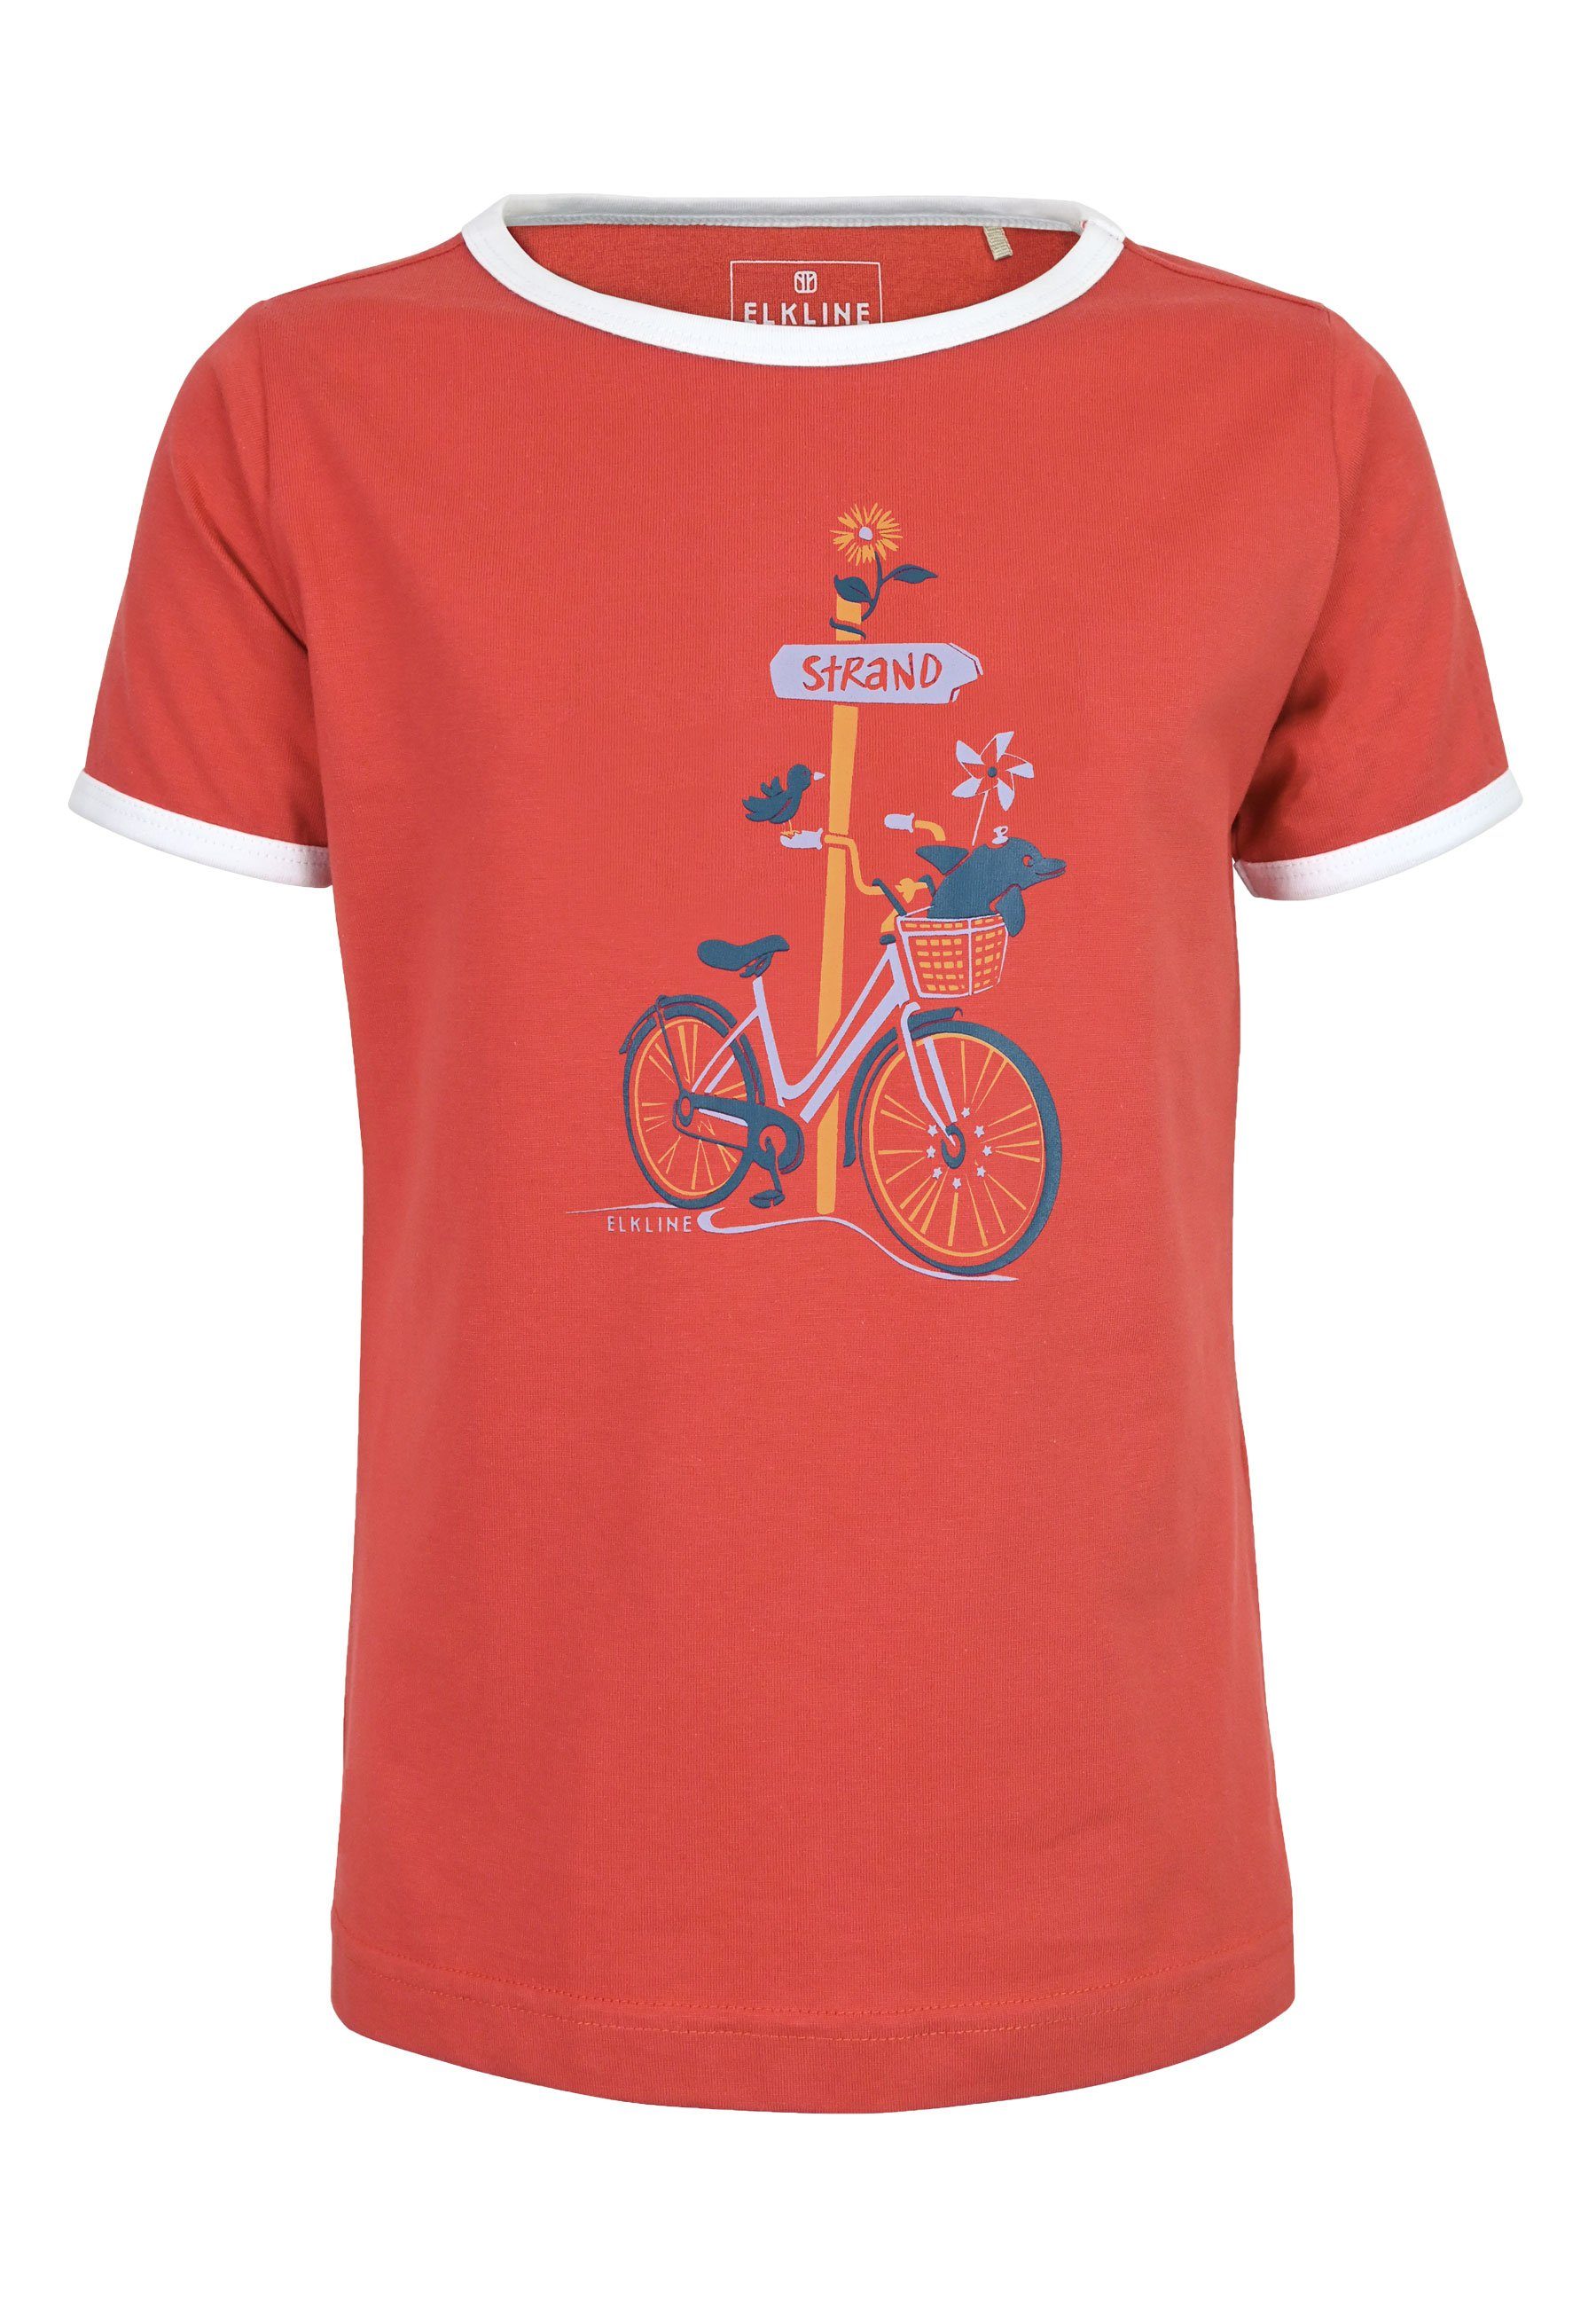 T-Shirt mandarin Zum Strand Print Brust leicht tailliert Elkline Fahrrad